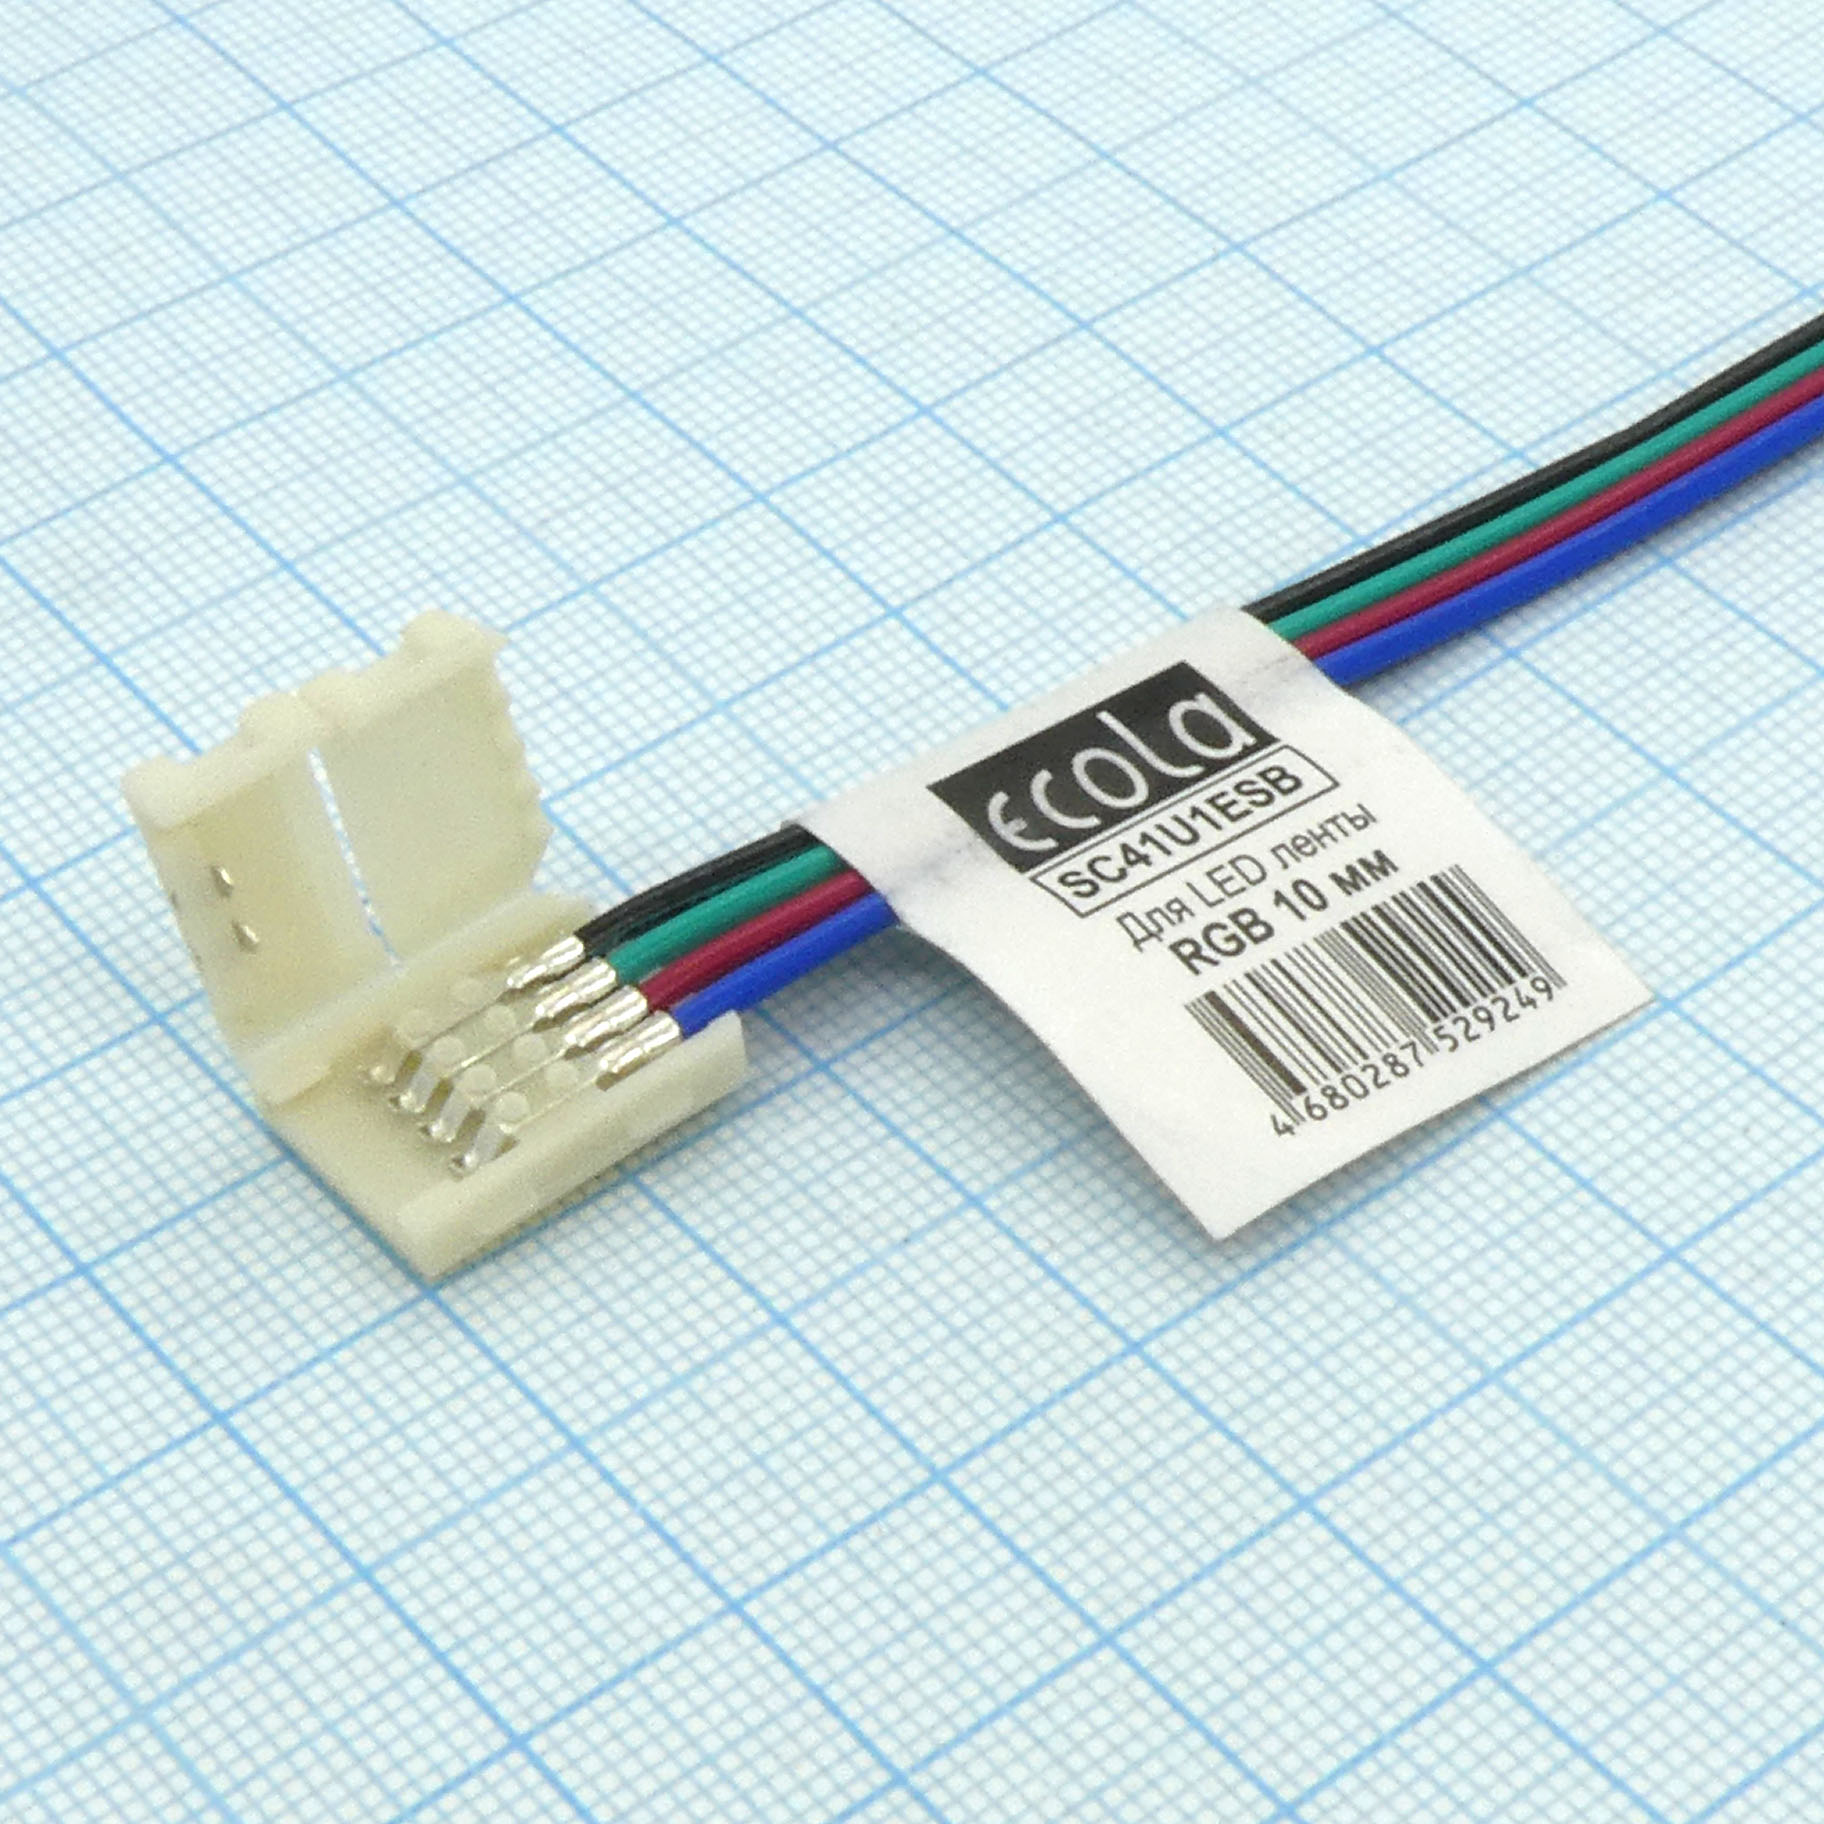 Коннектор для LED-ленты RGB кп